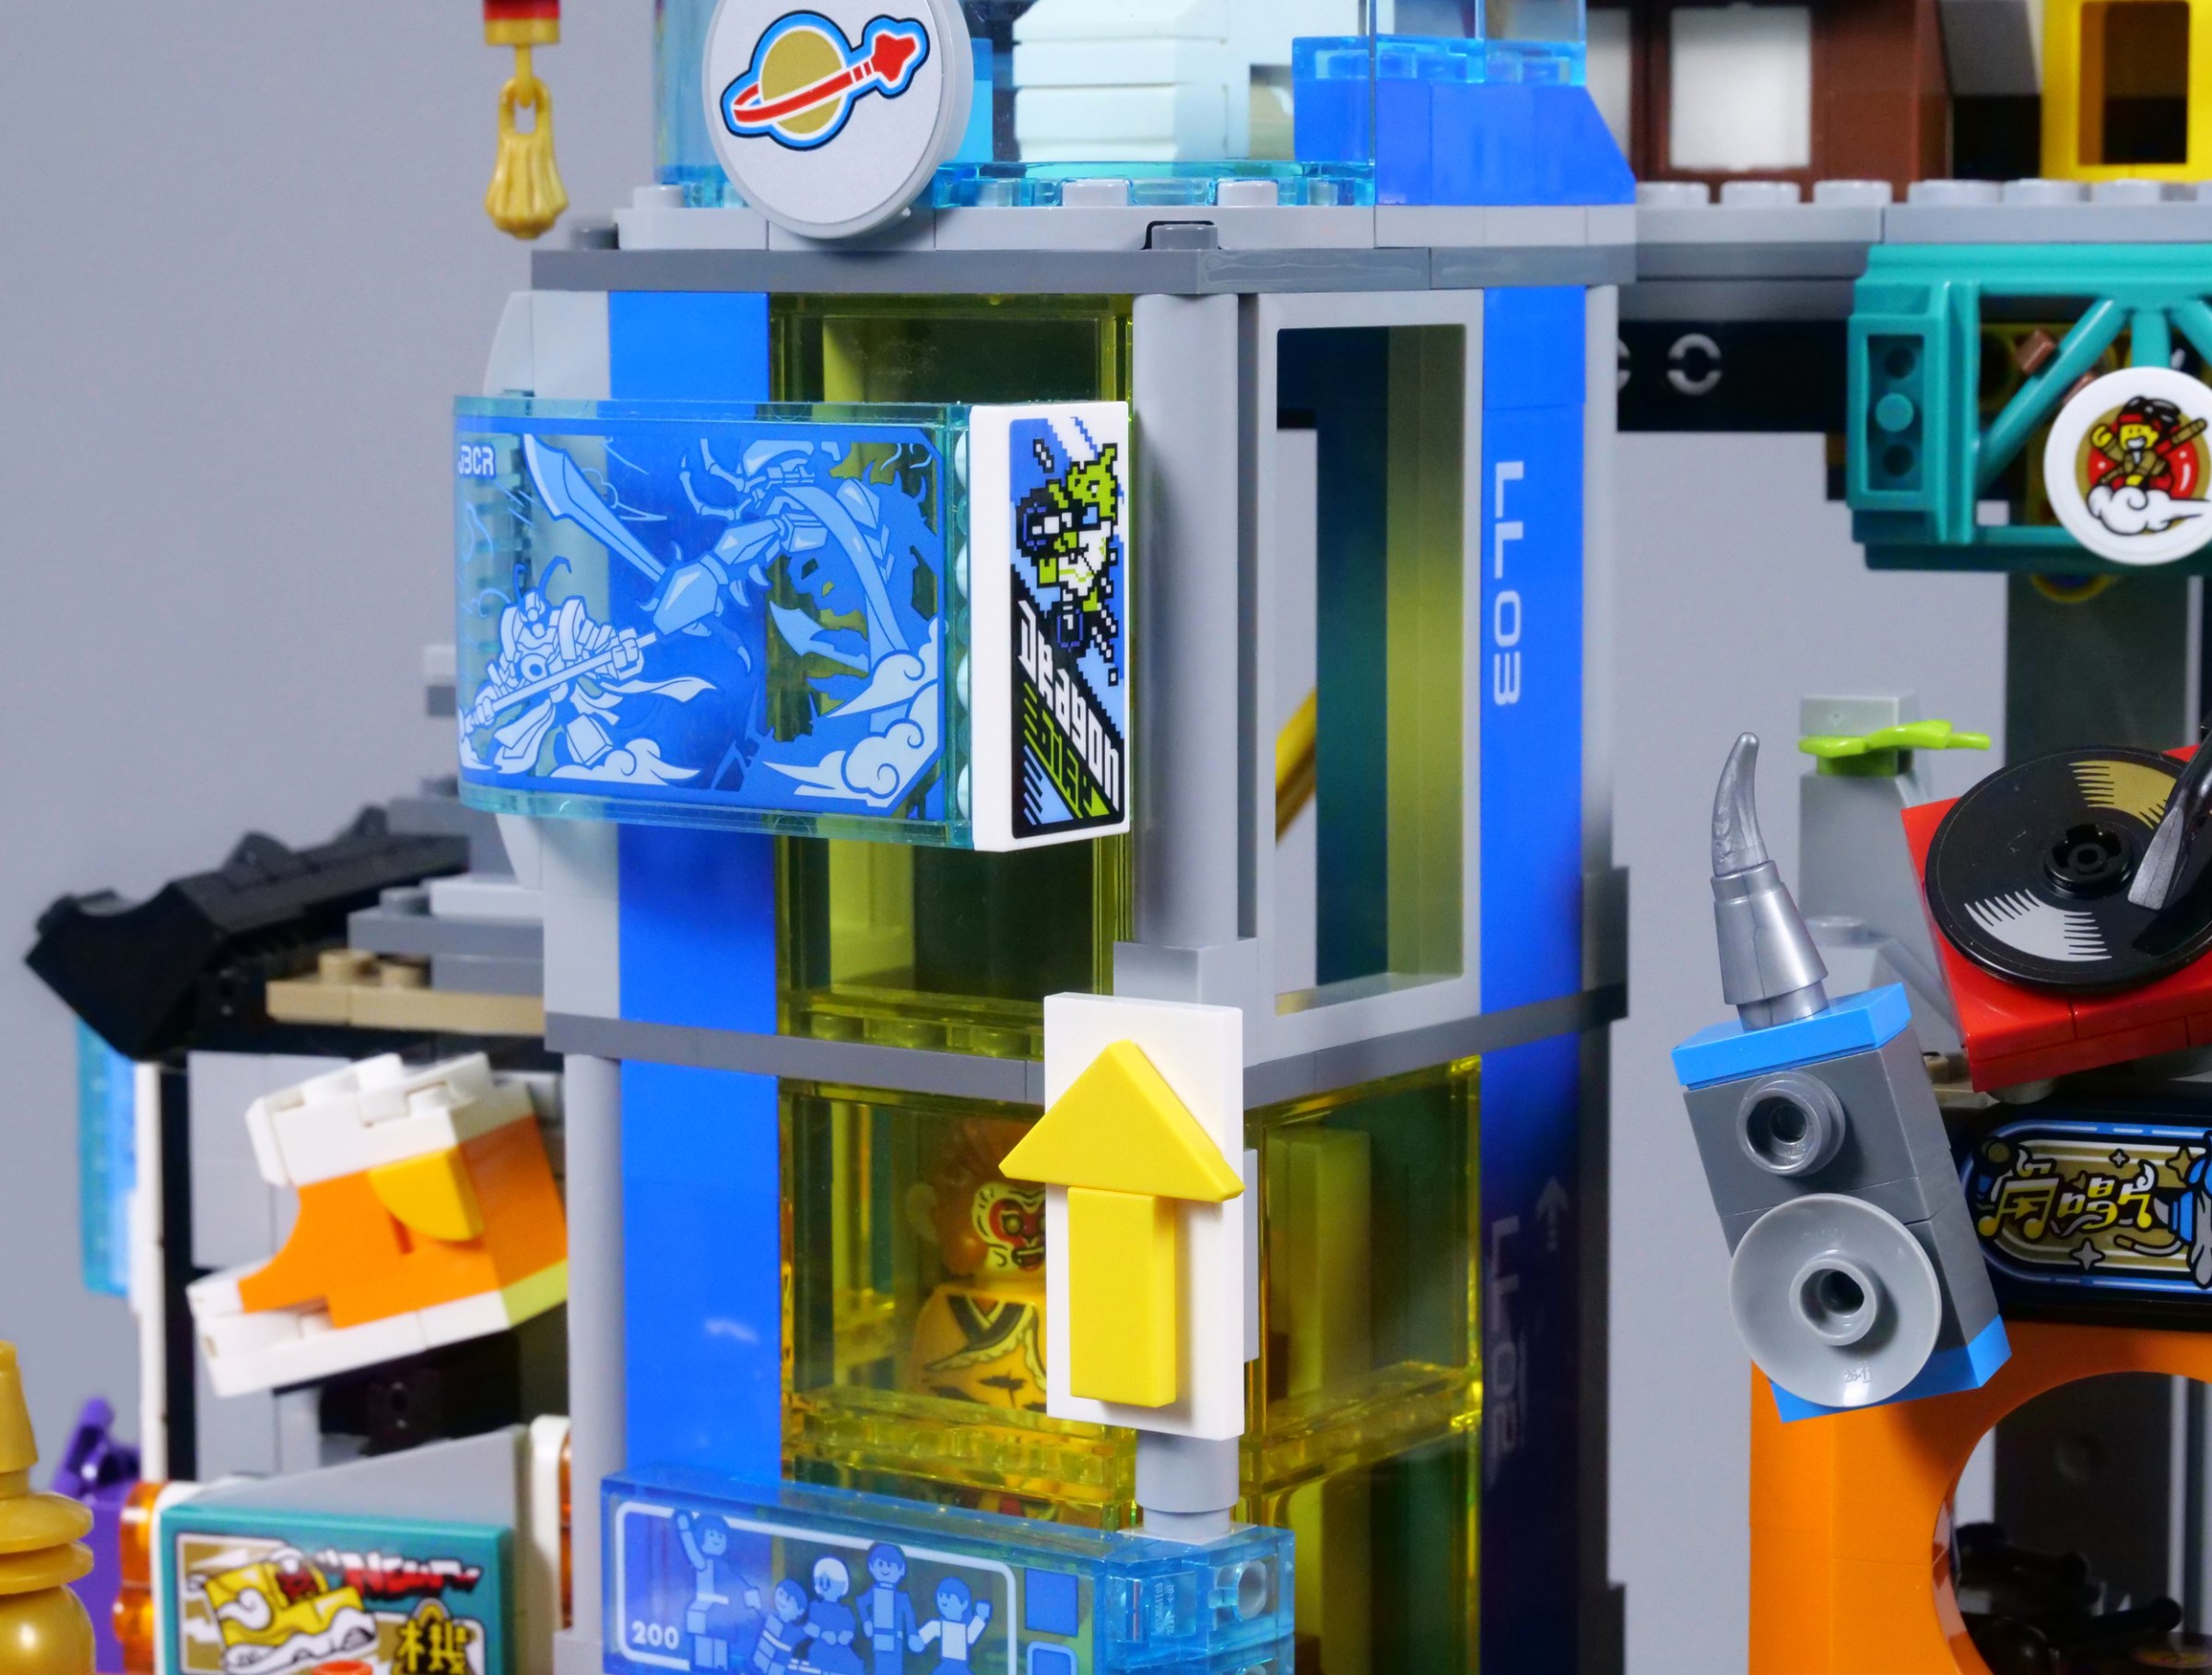 LEGO 80054 Megapolis City review | Brickset